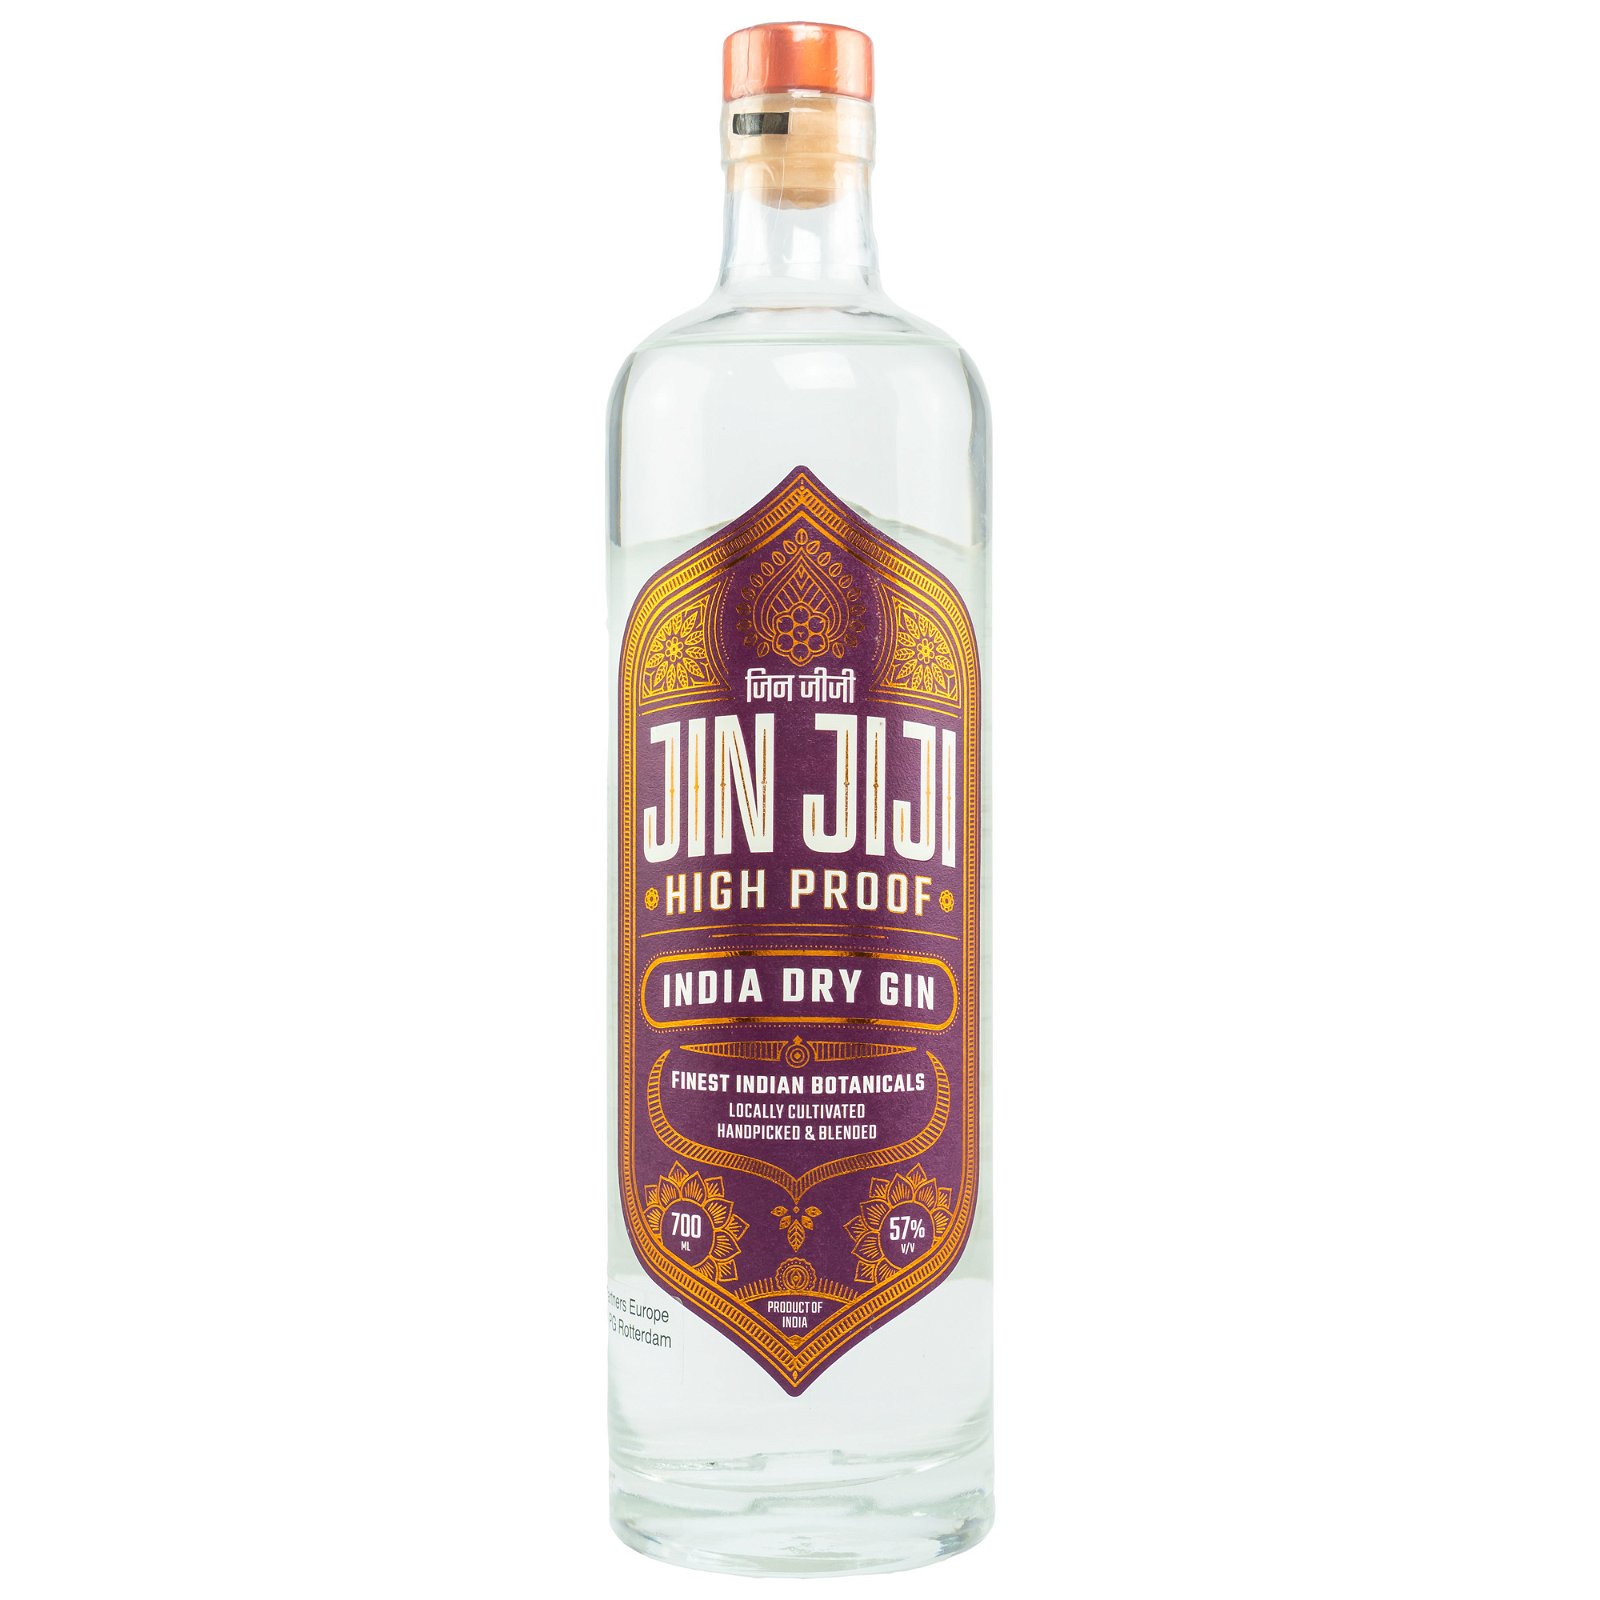 Jin JiJi High Proof India Dry Gin